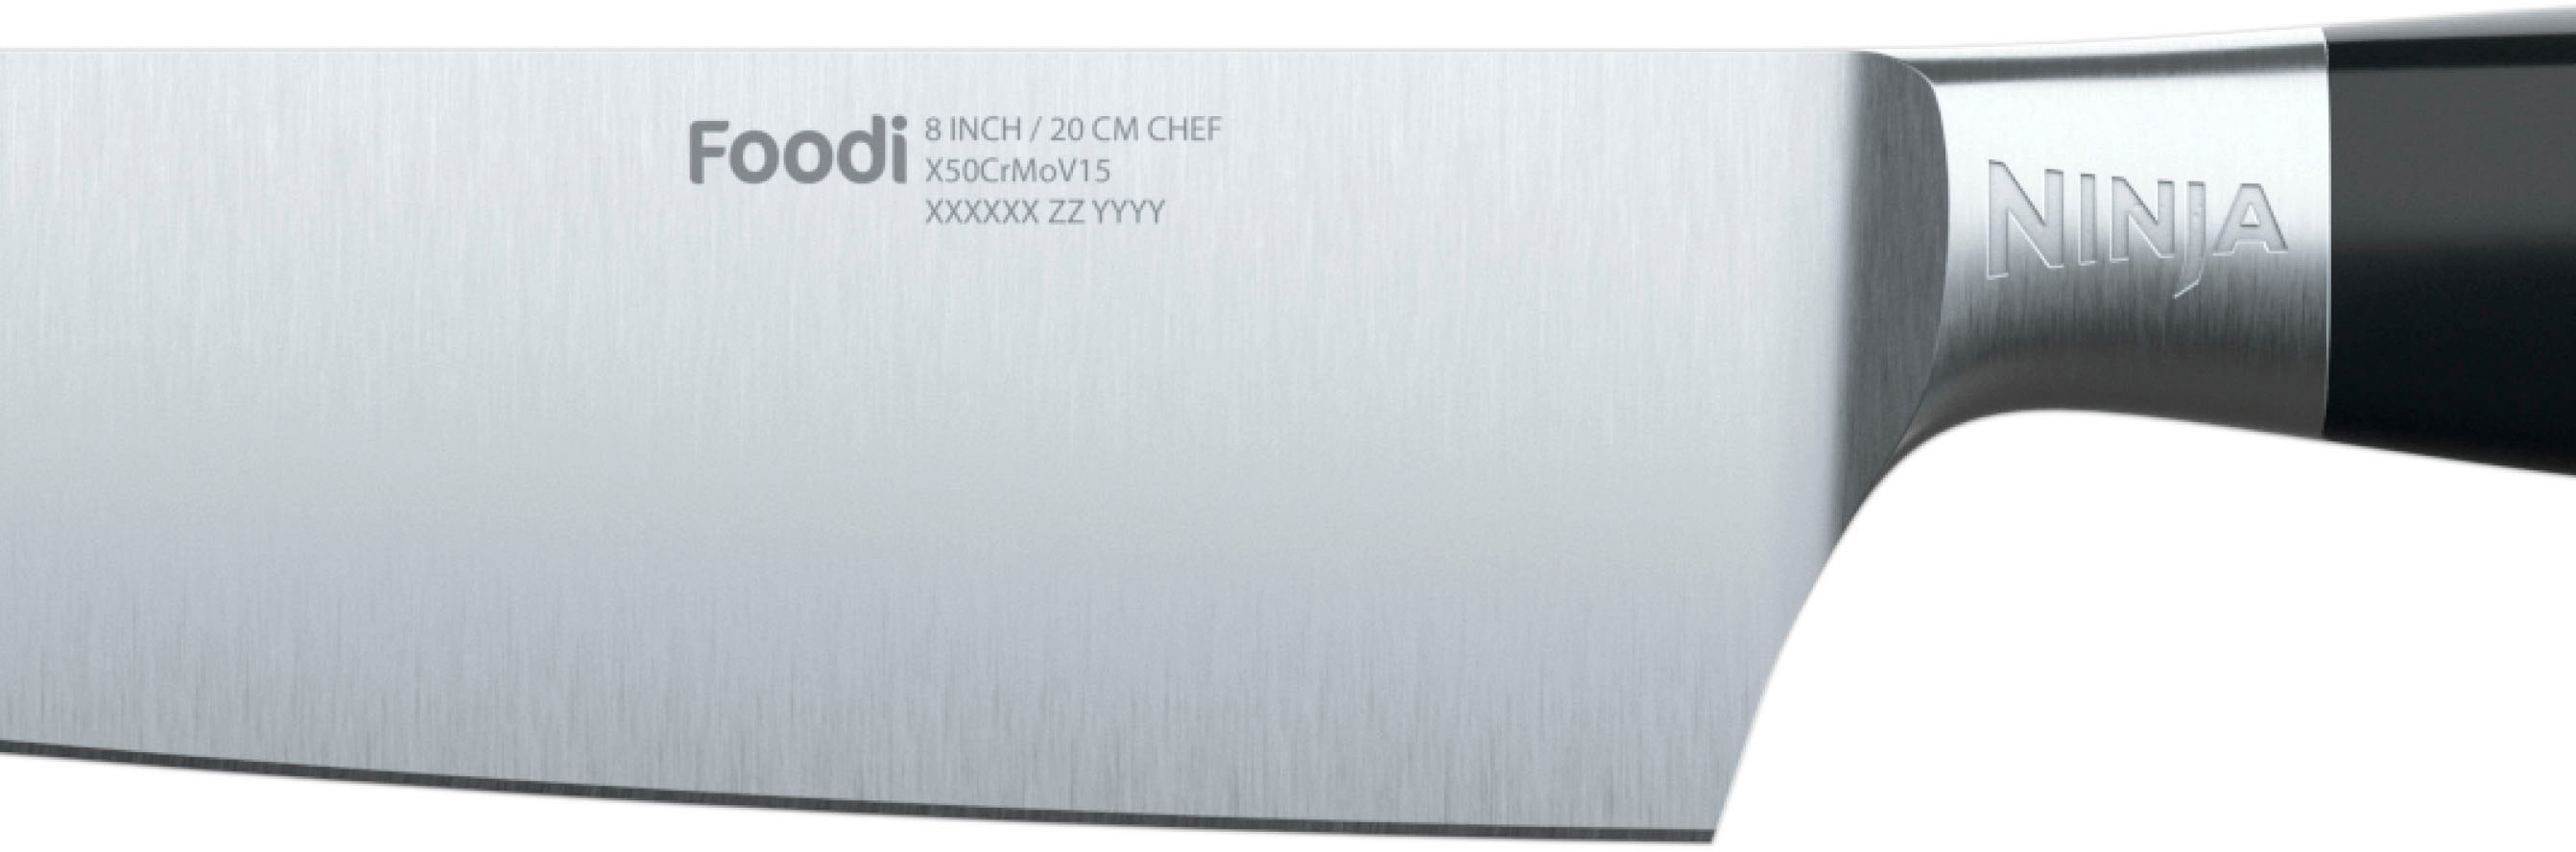 Ninja K30020 Foodi NeverDull System 8-Inch Chef Knife, Premium, German  Stainless Steel, Black